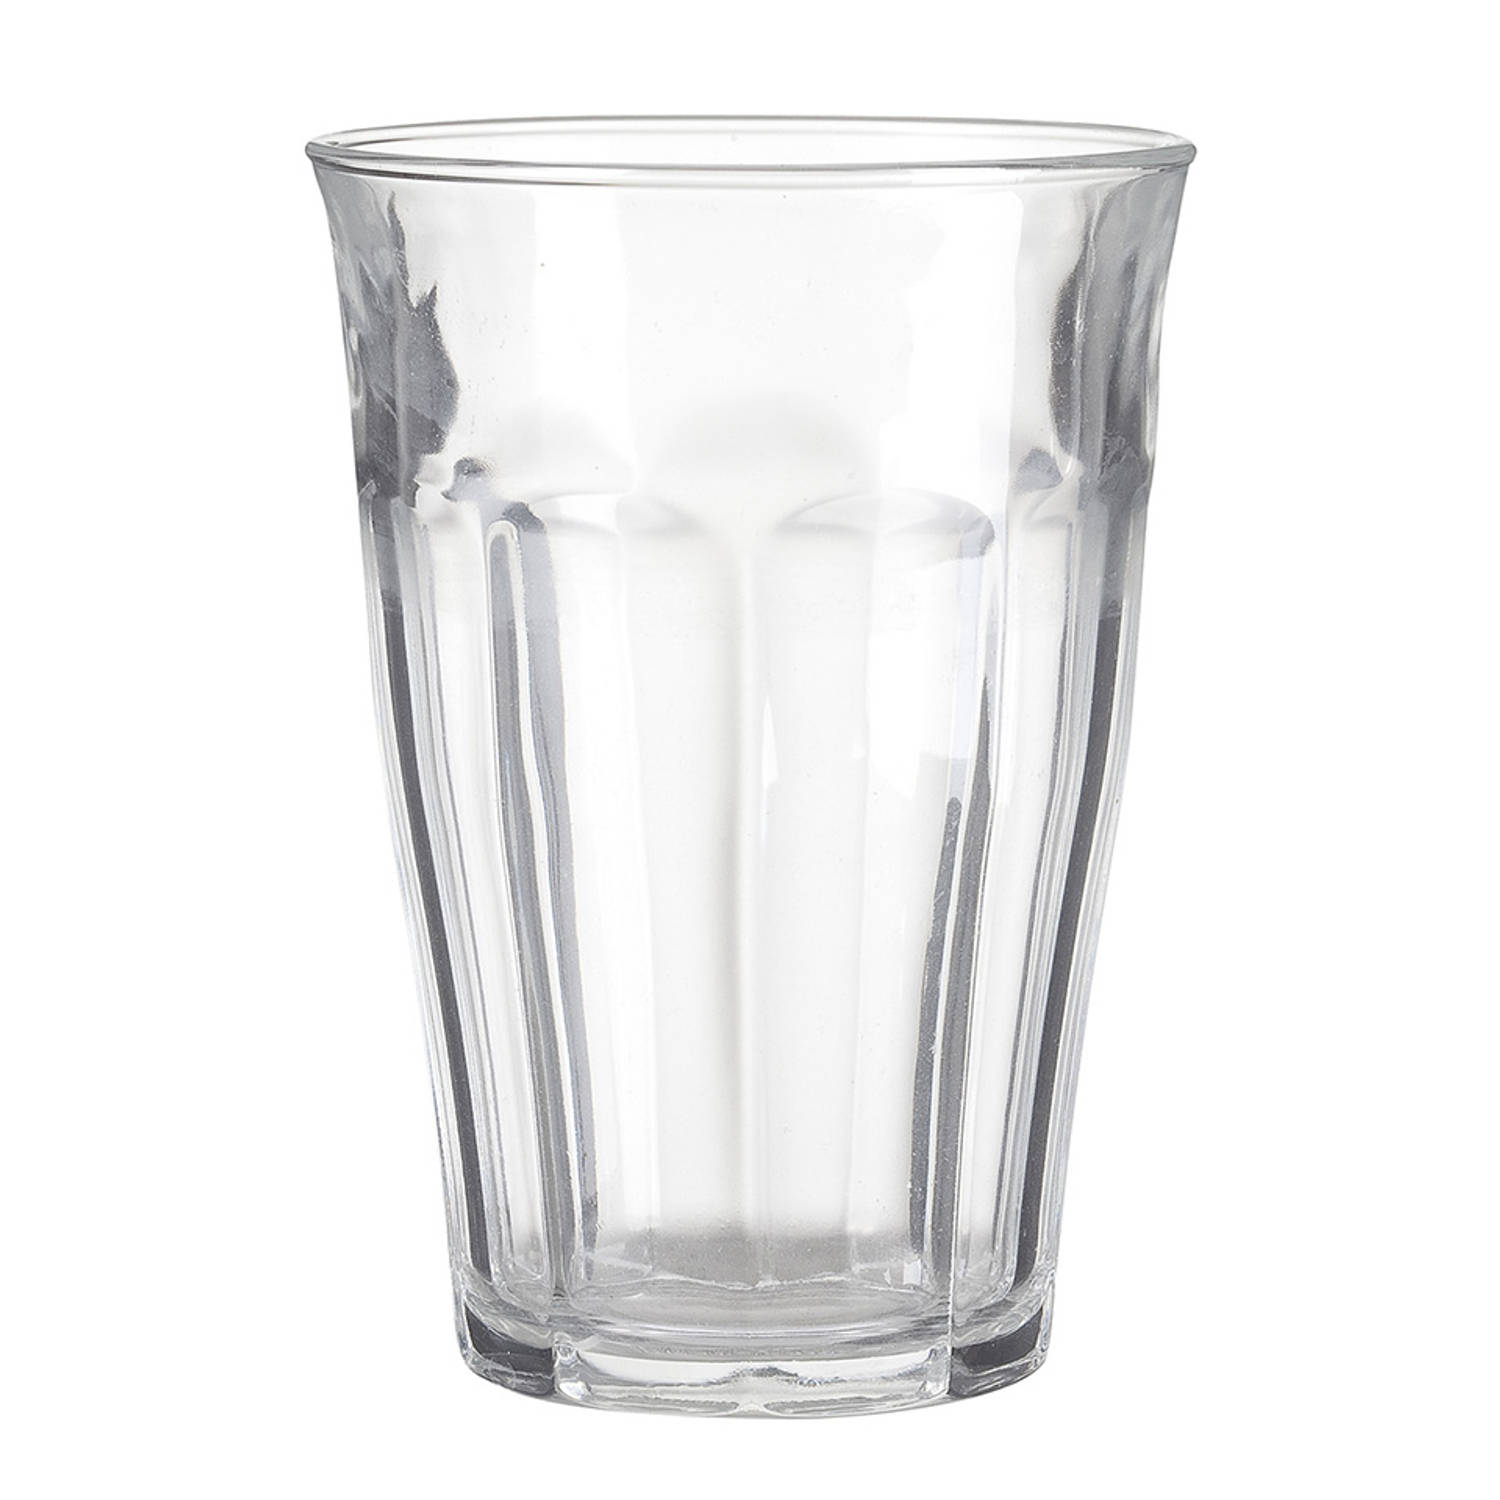 Duralex Picardi drinkglas - 36 cl - 4 stuks